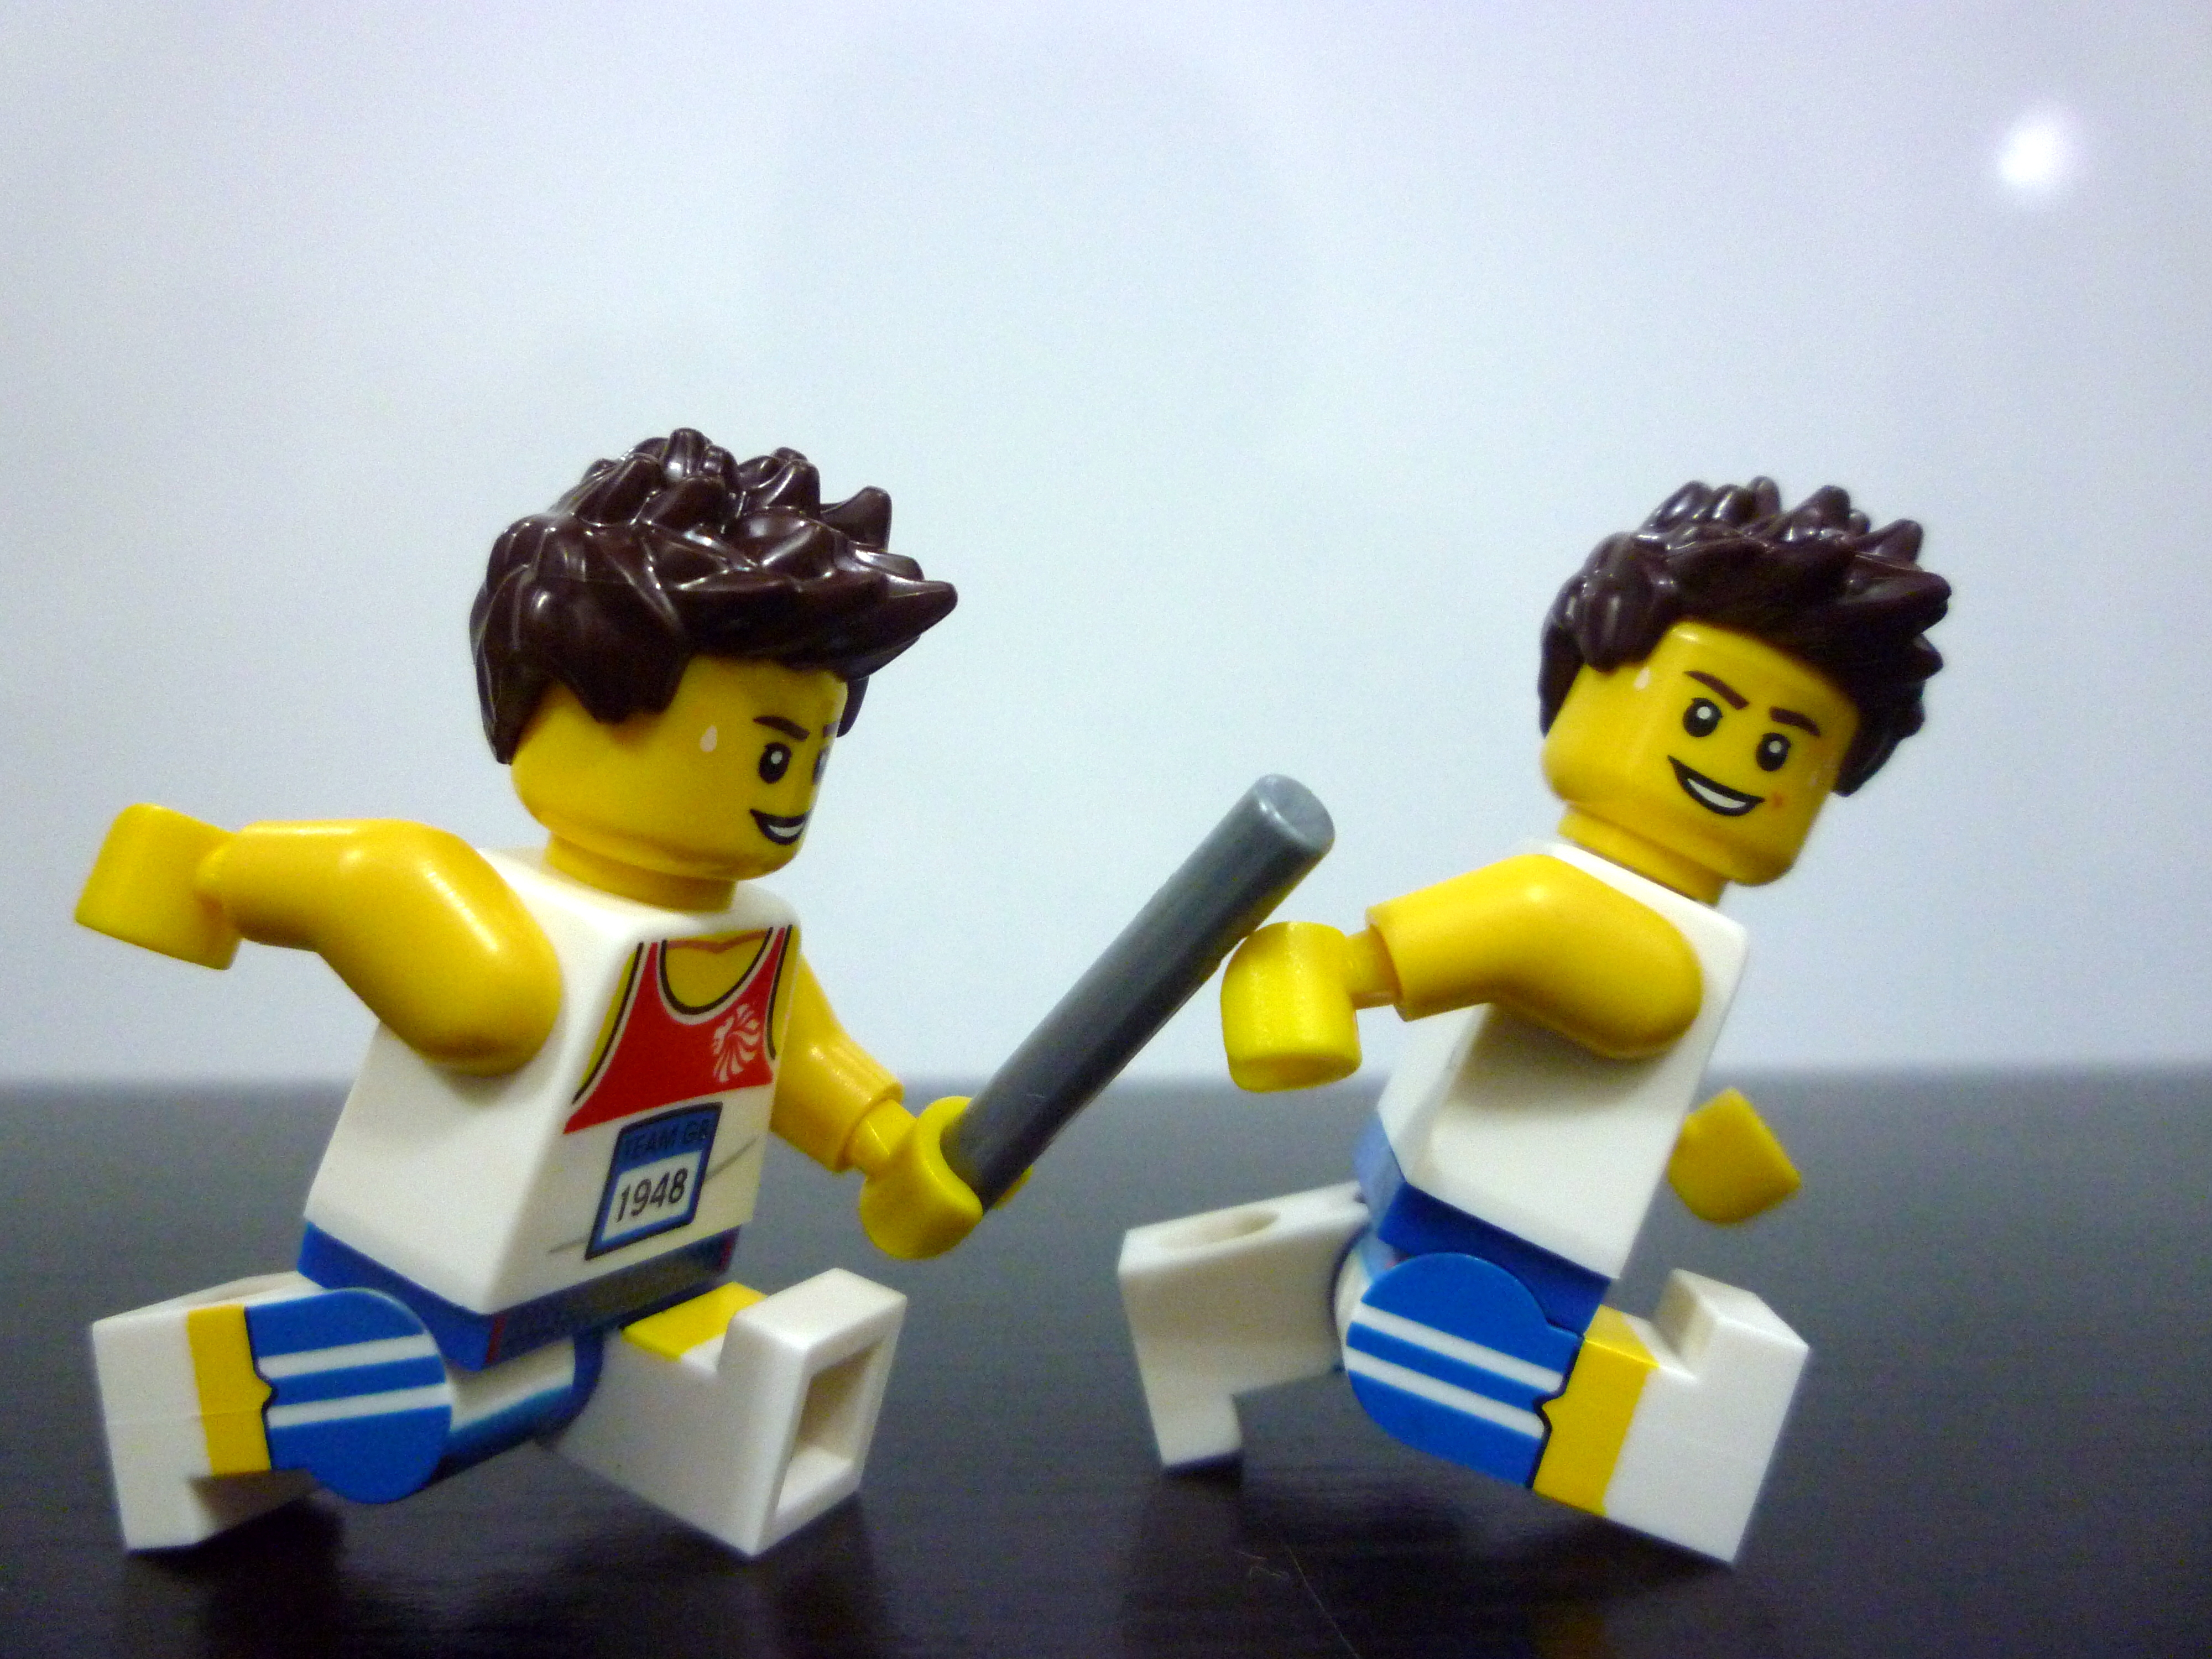 Lego Team GB Minifigures Review - Jays Brick Blog